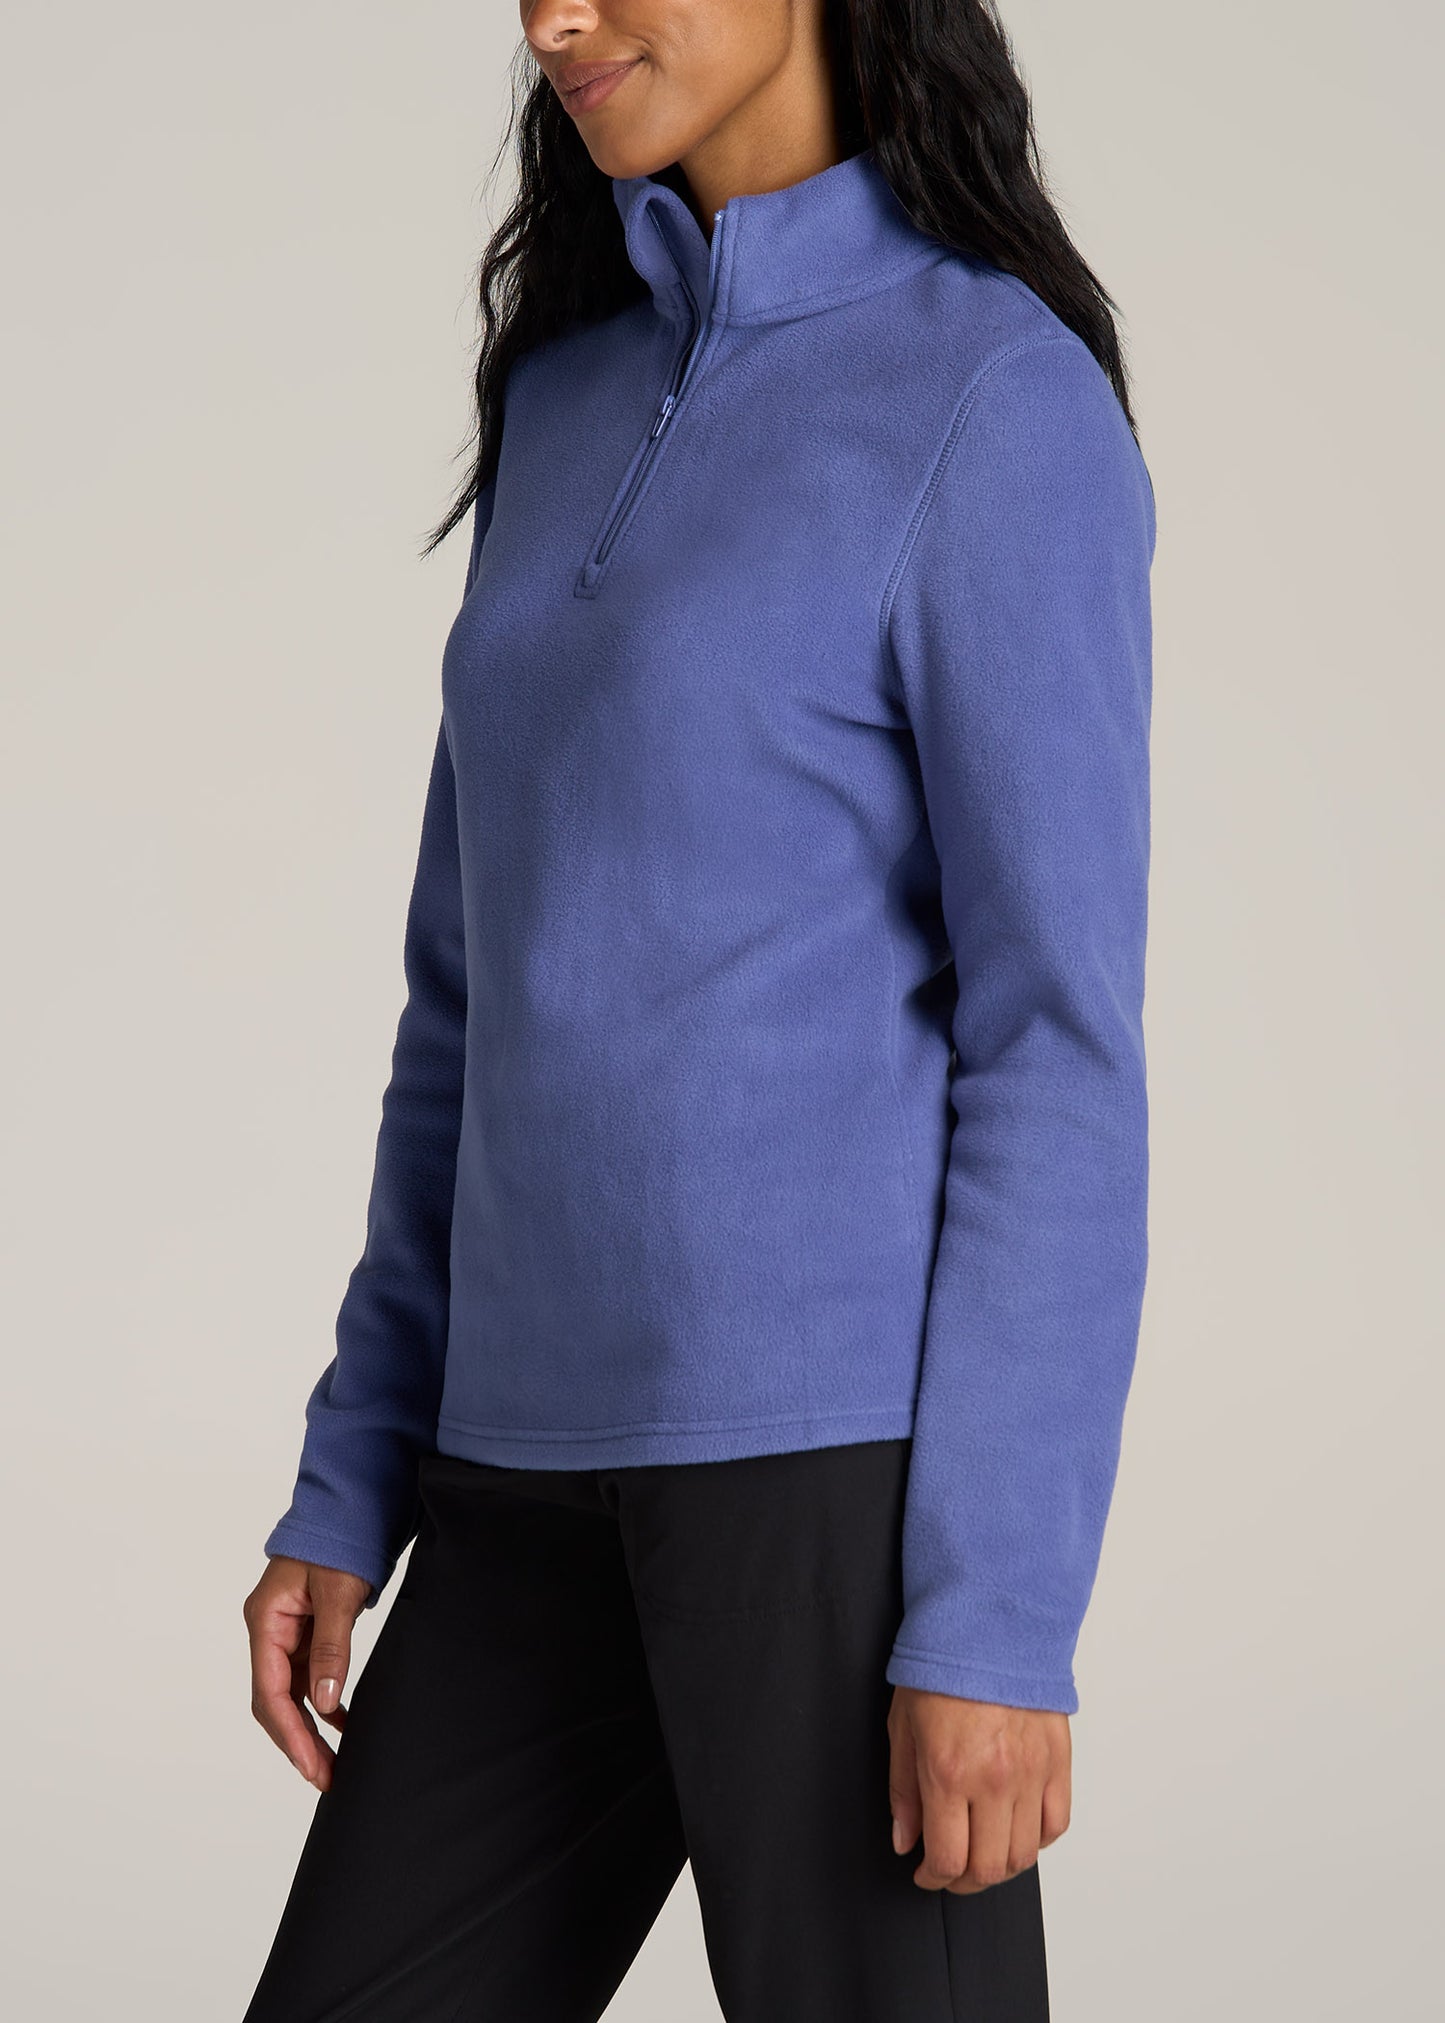 American-Tall-Women-Half-Zip-Polar-Fleece-sweatshirt-Marlin-Blue-side